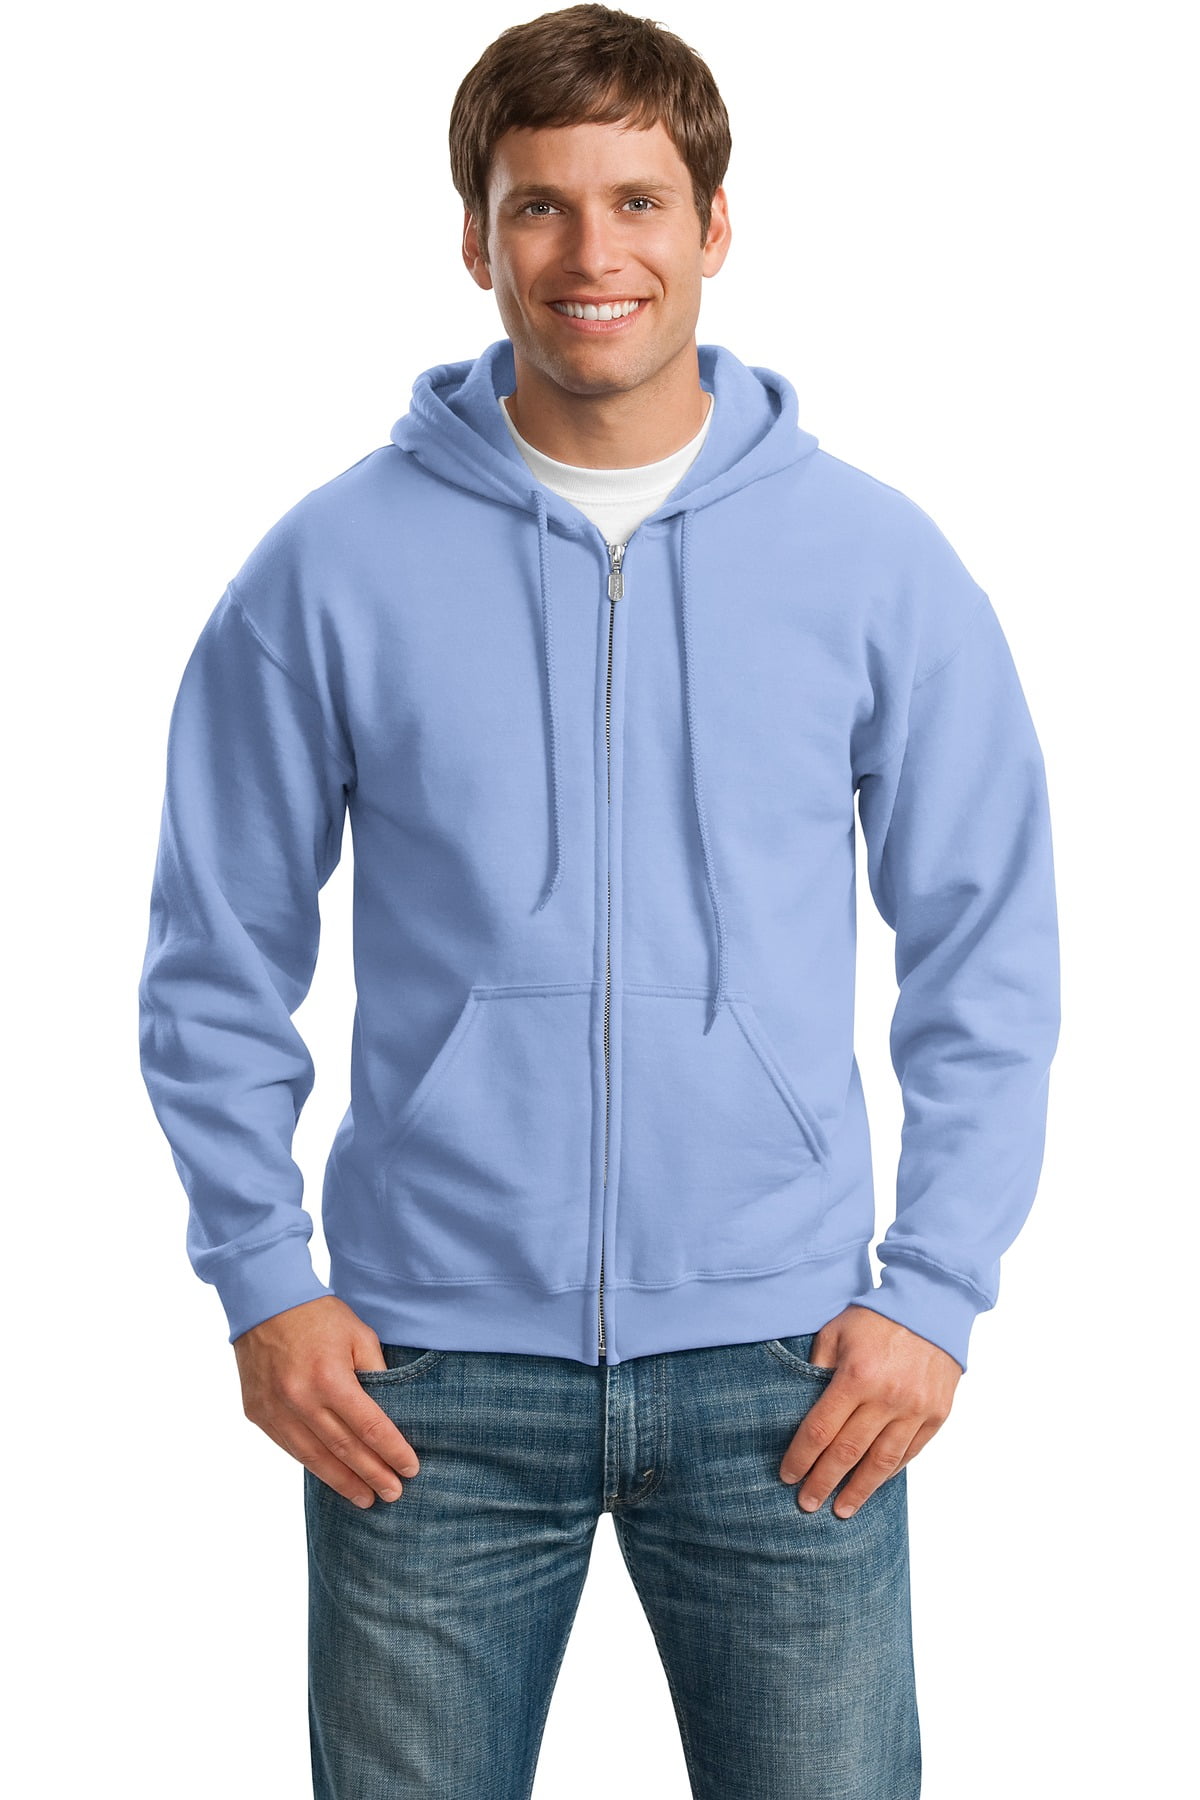 Heavy Blend Full-Zip Hooded Sweatshirt - Walmart.com